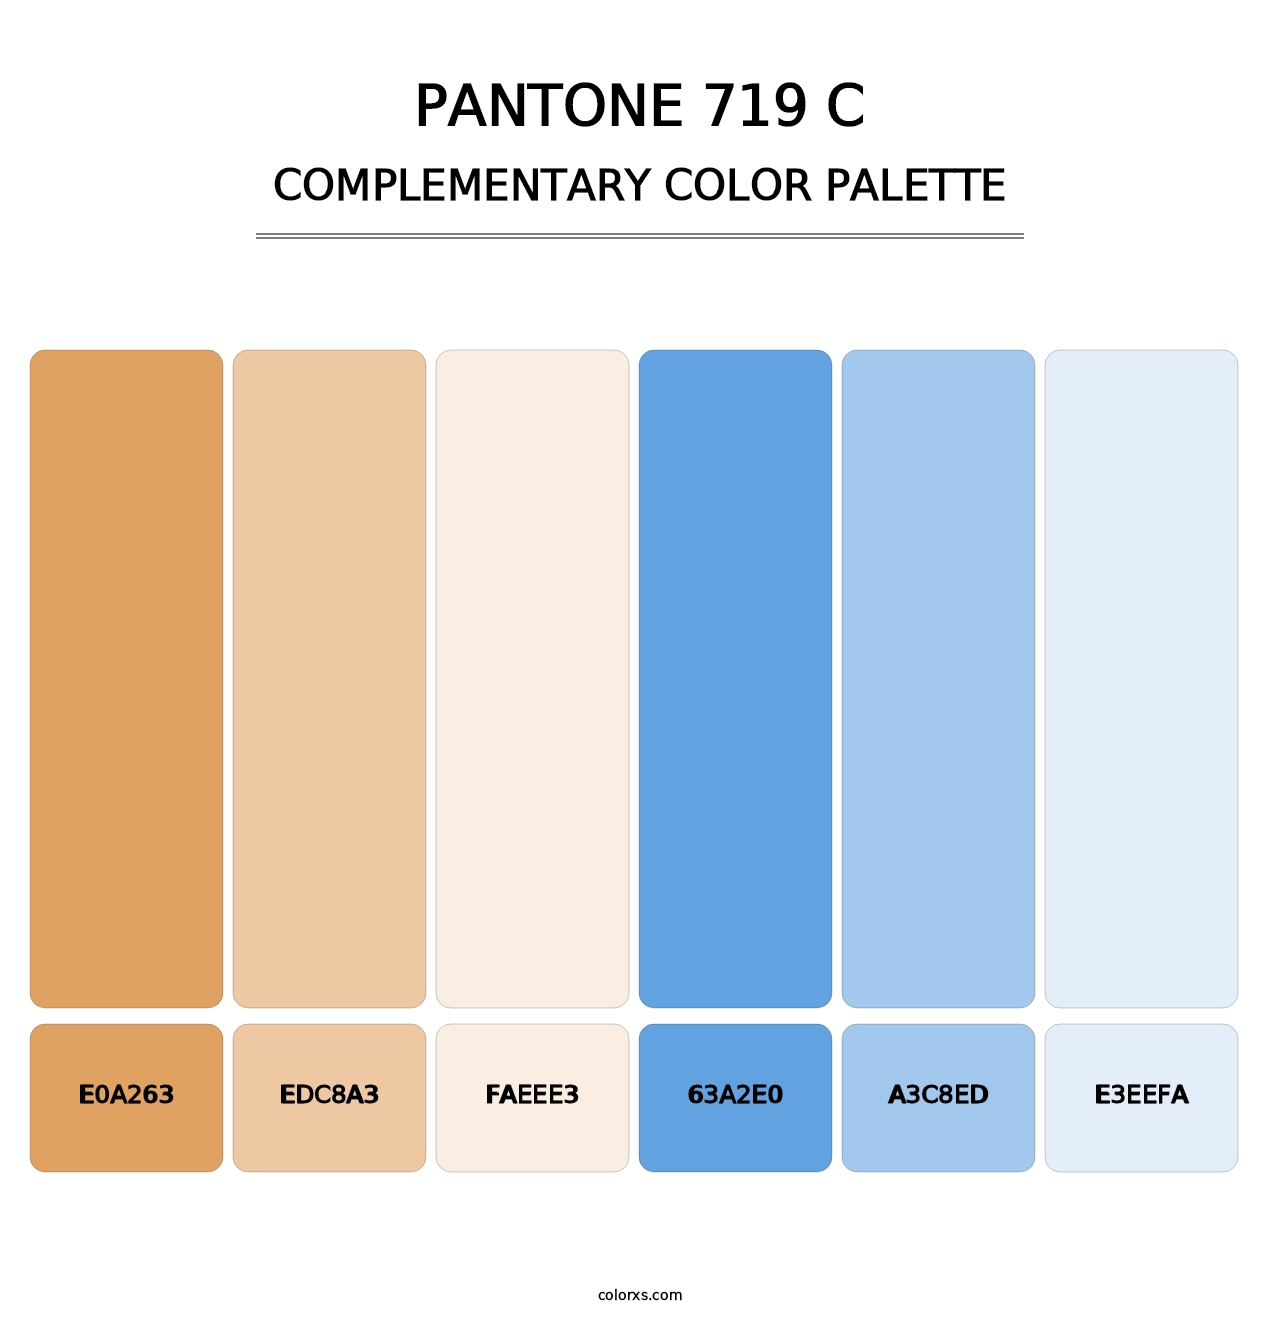 PANTONE 719 C - Complementary Color Palette